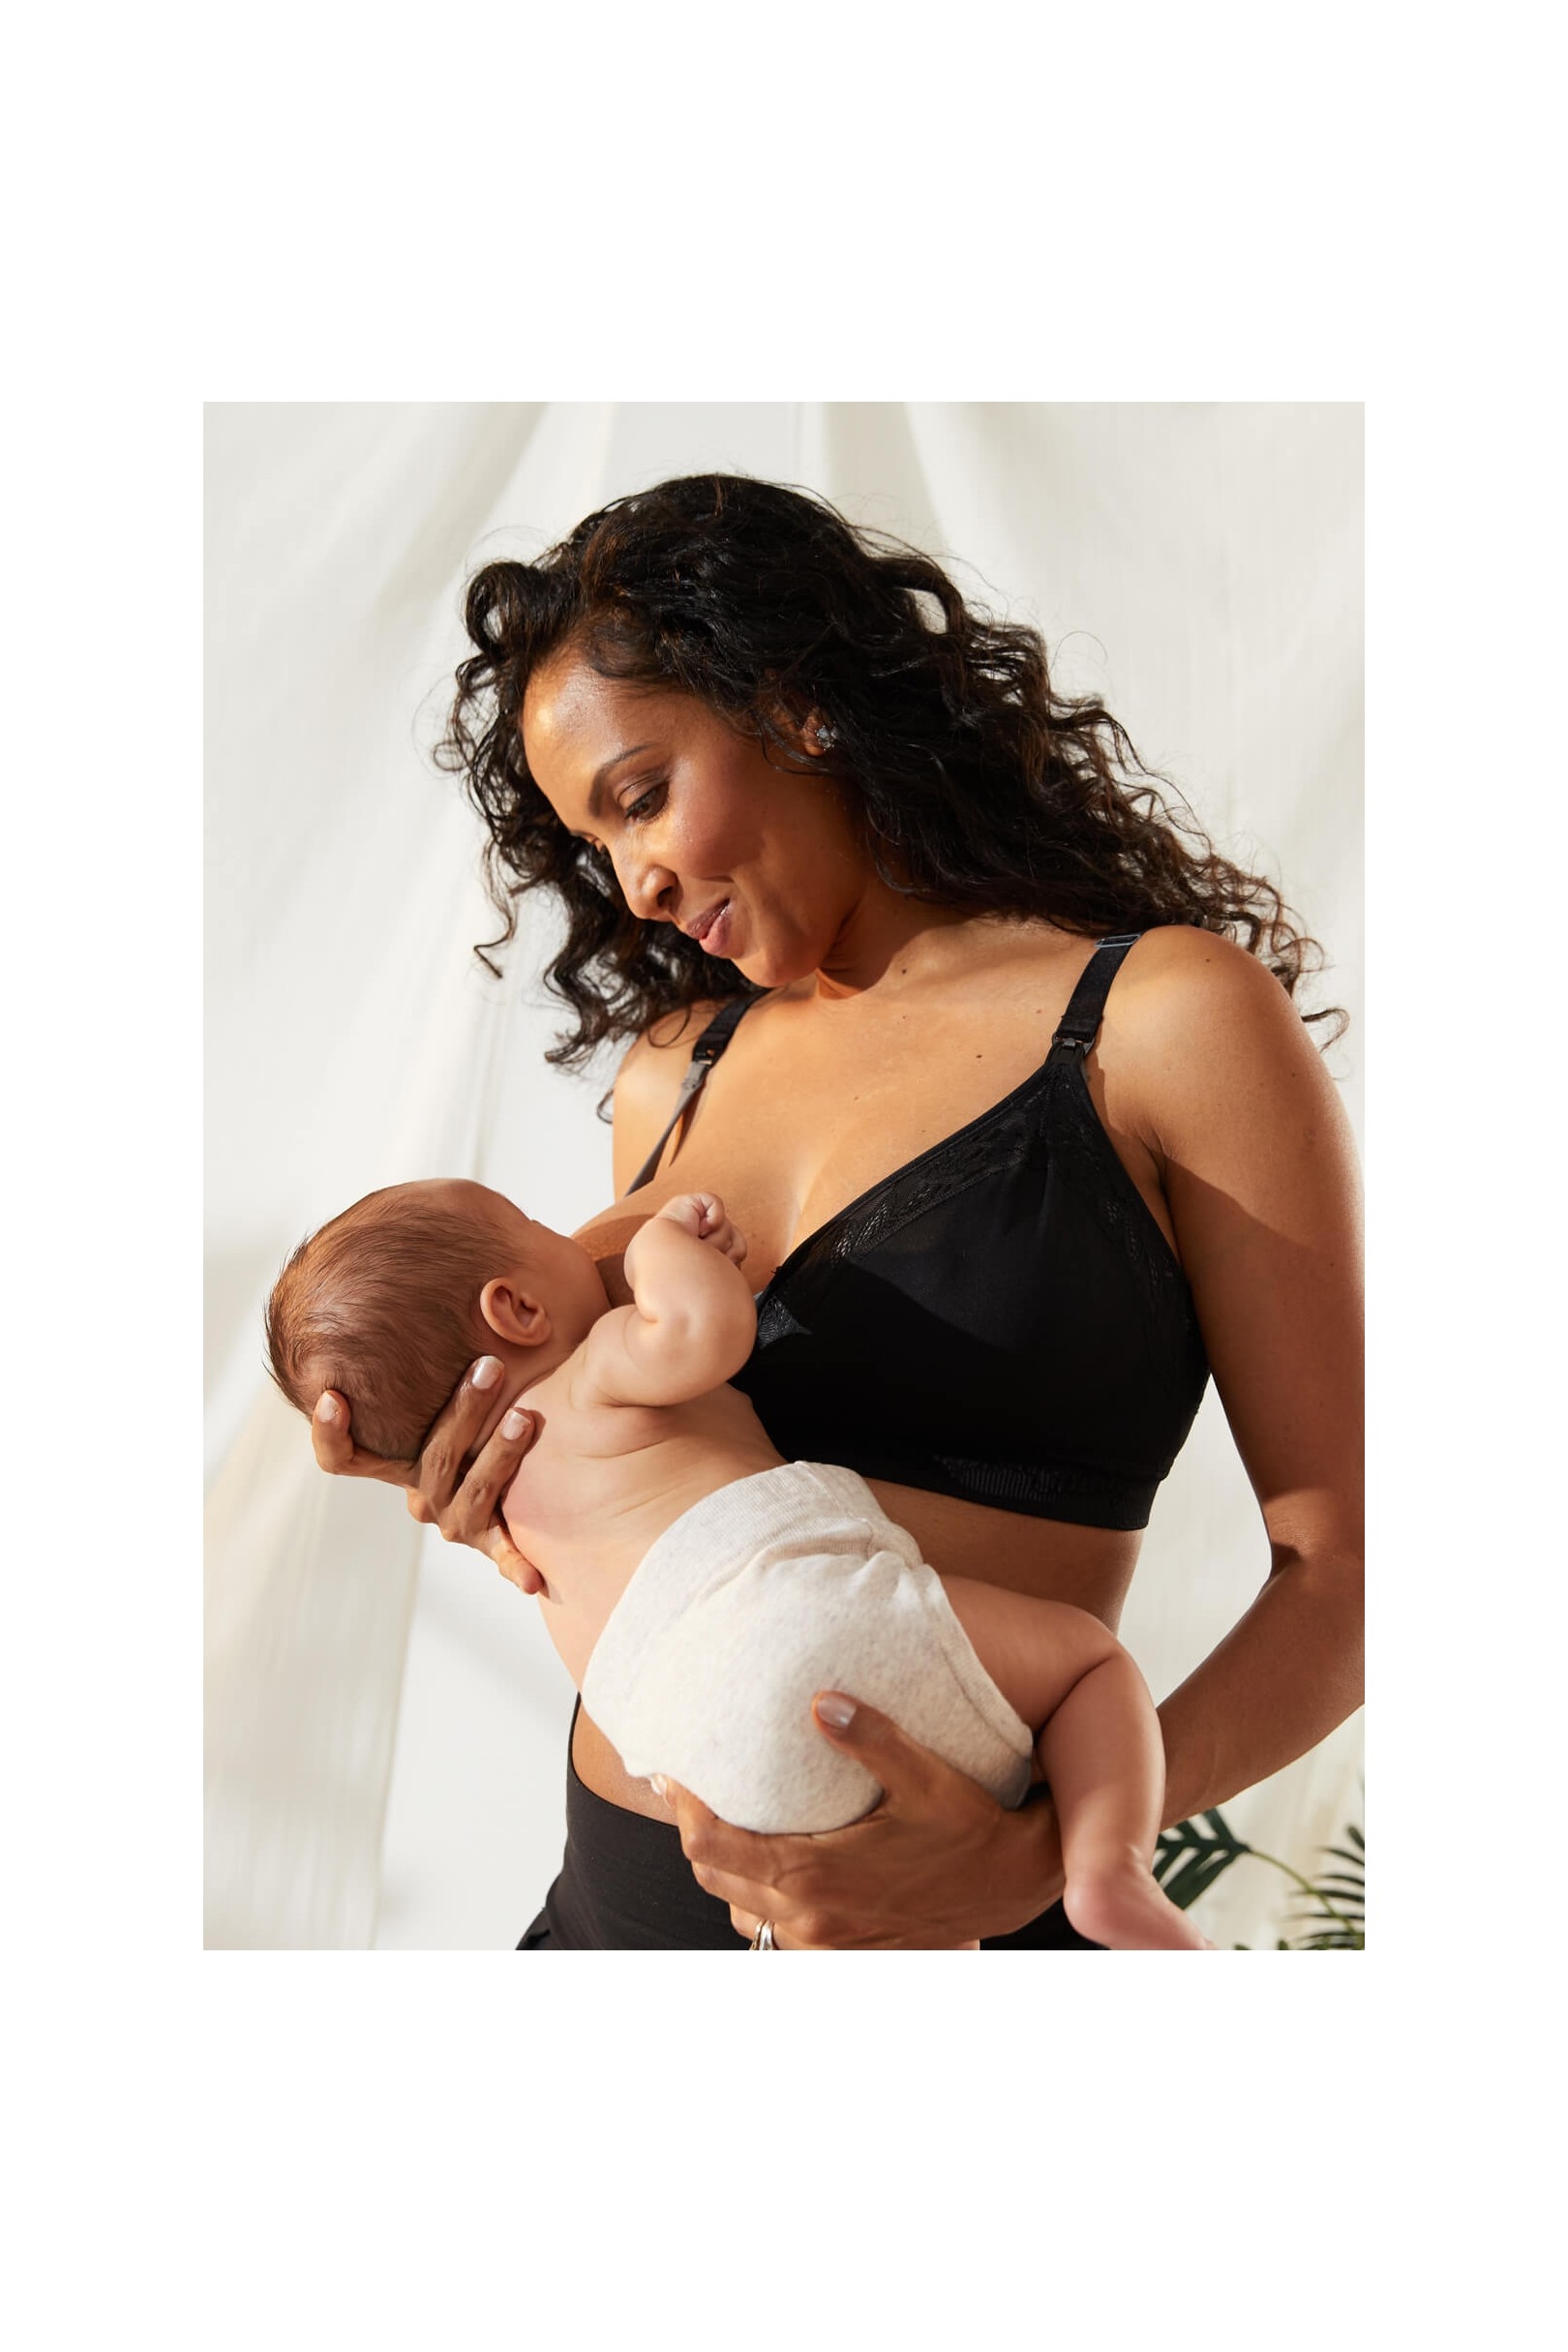 Open Buckle Nursing Maternity Breastfeeding Bra D Cup Small Breast Largr  Breast Pregnant Women Underwear Sexy Pregnancy Clothes Y0925